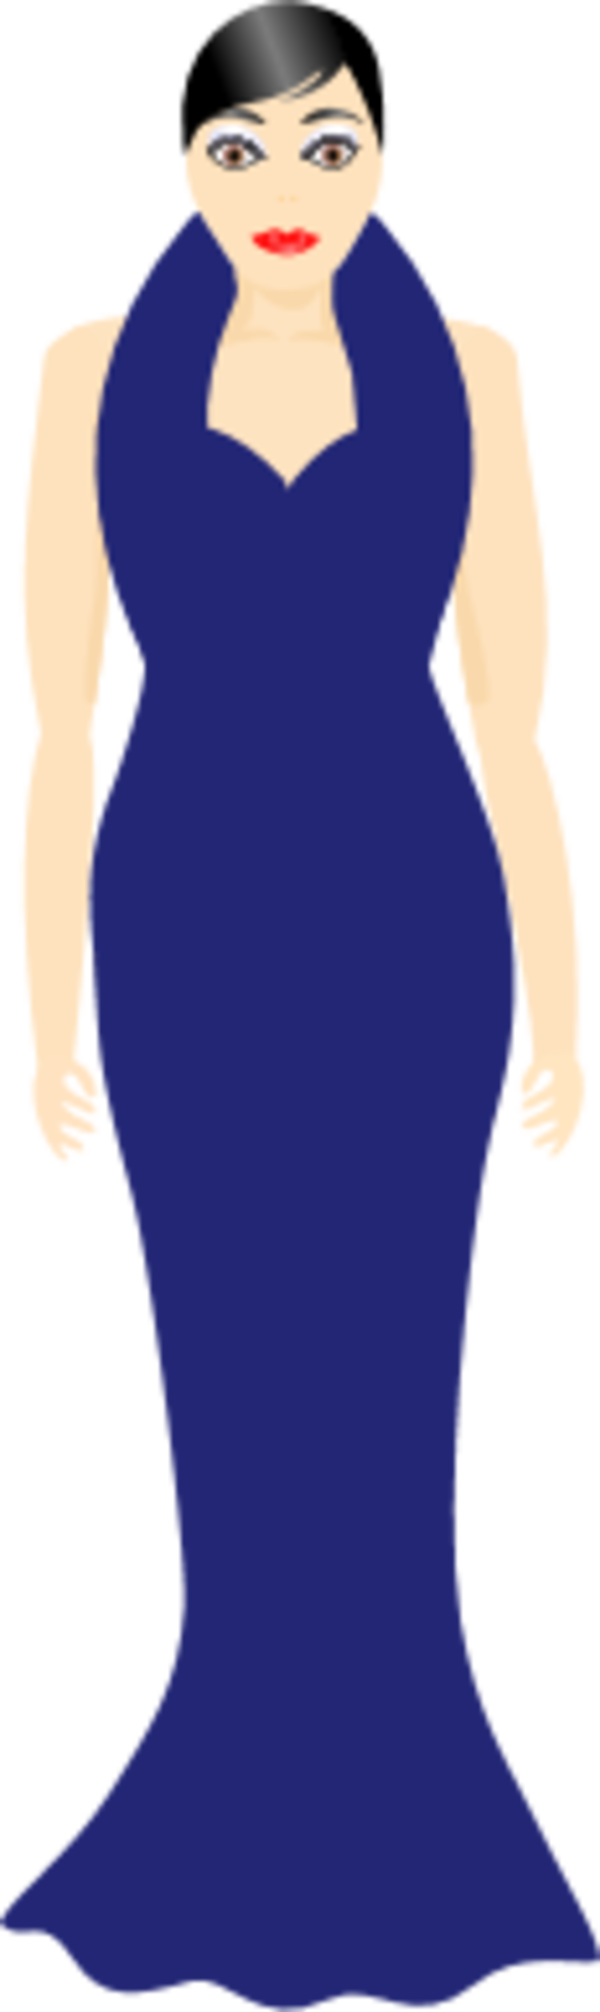 Woman Clipart Dress - Woman Clipart Dress (1697x2400)